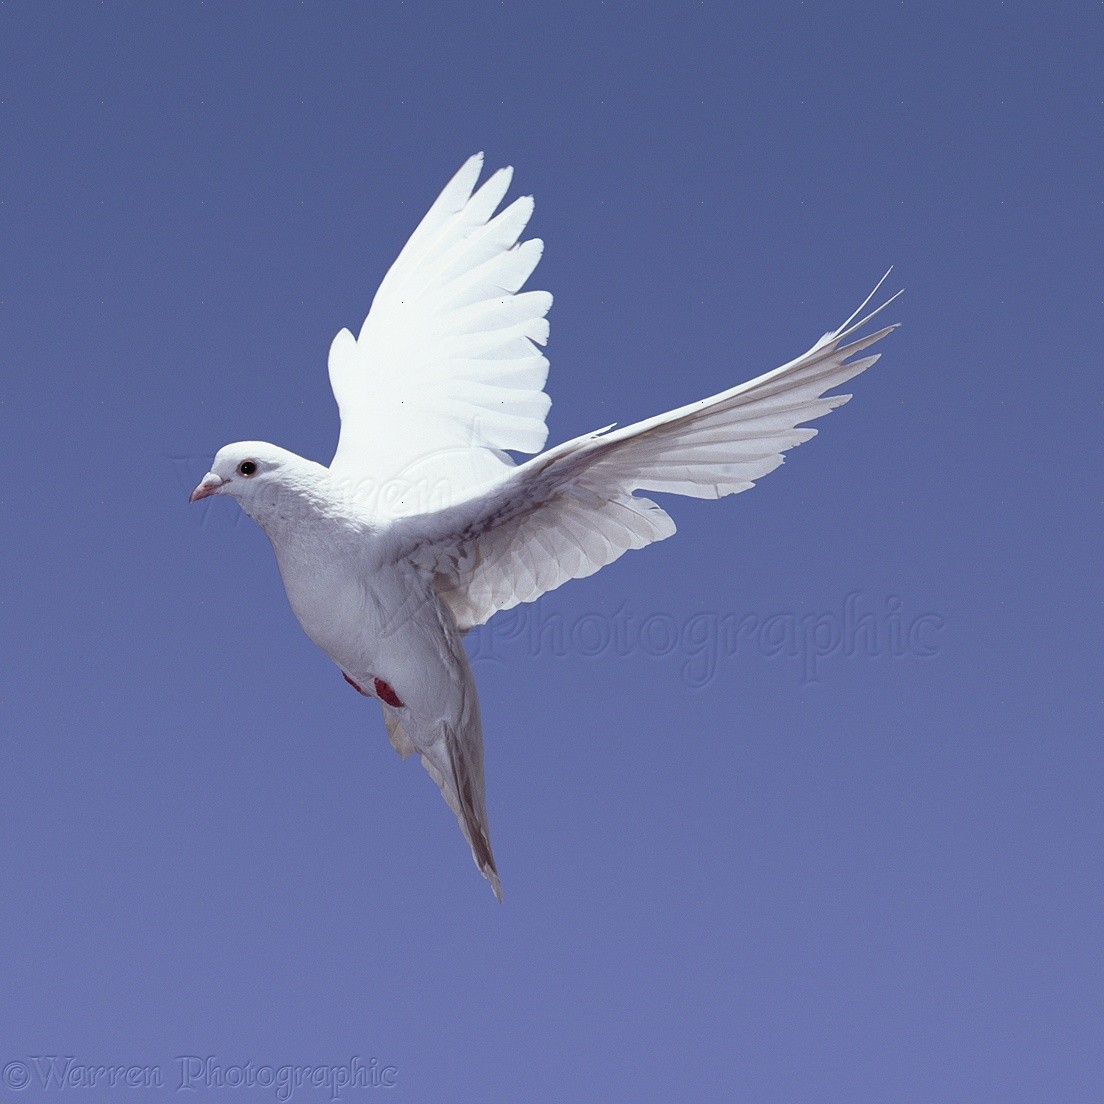 https://www.warrenphotographic.co.uk/photgraphy/bigs/06616-white-pigeon-in-flight-series-3-of-7.jpg